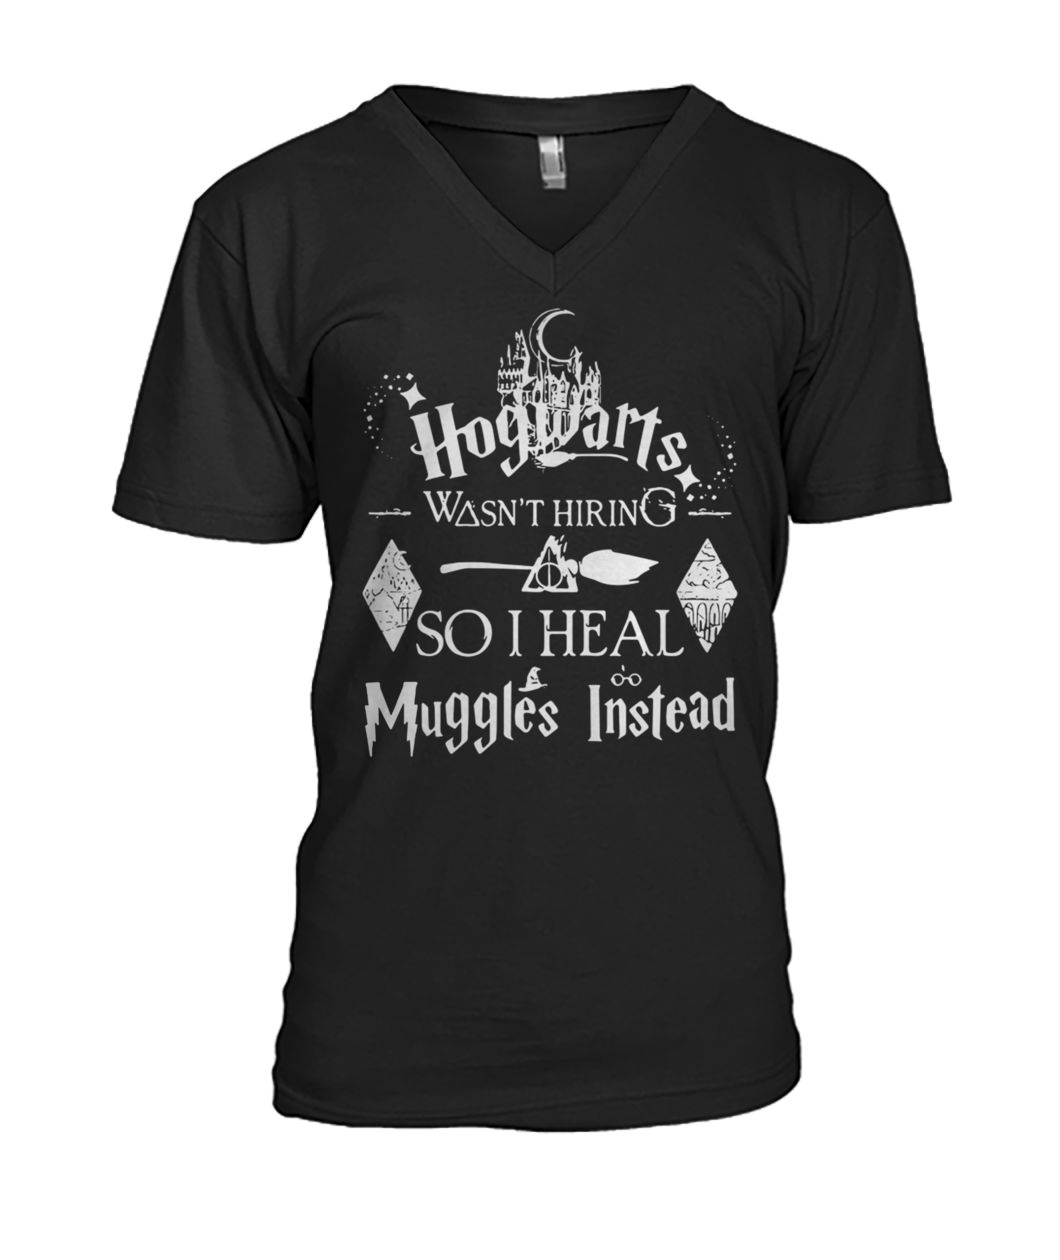 Harry potter hogwarts was not hiring so i heal muggles instead mens v-neck